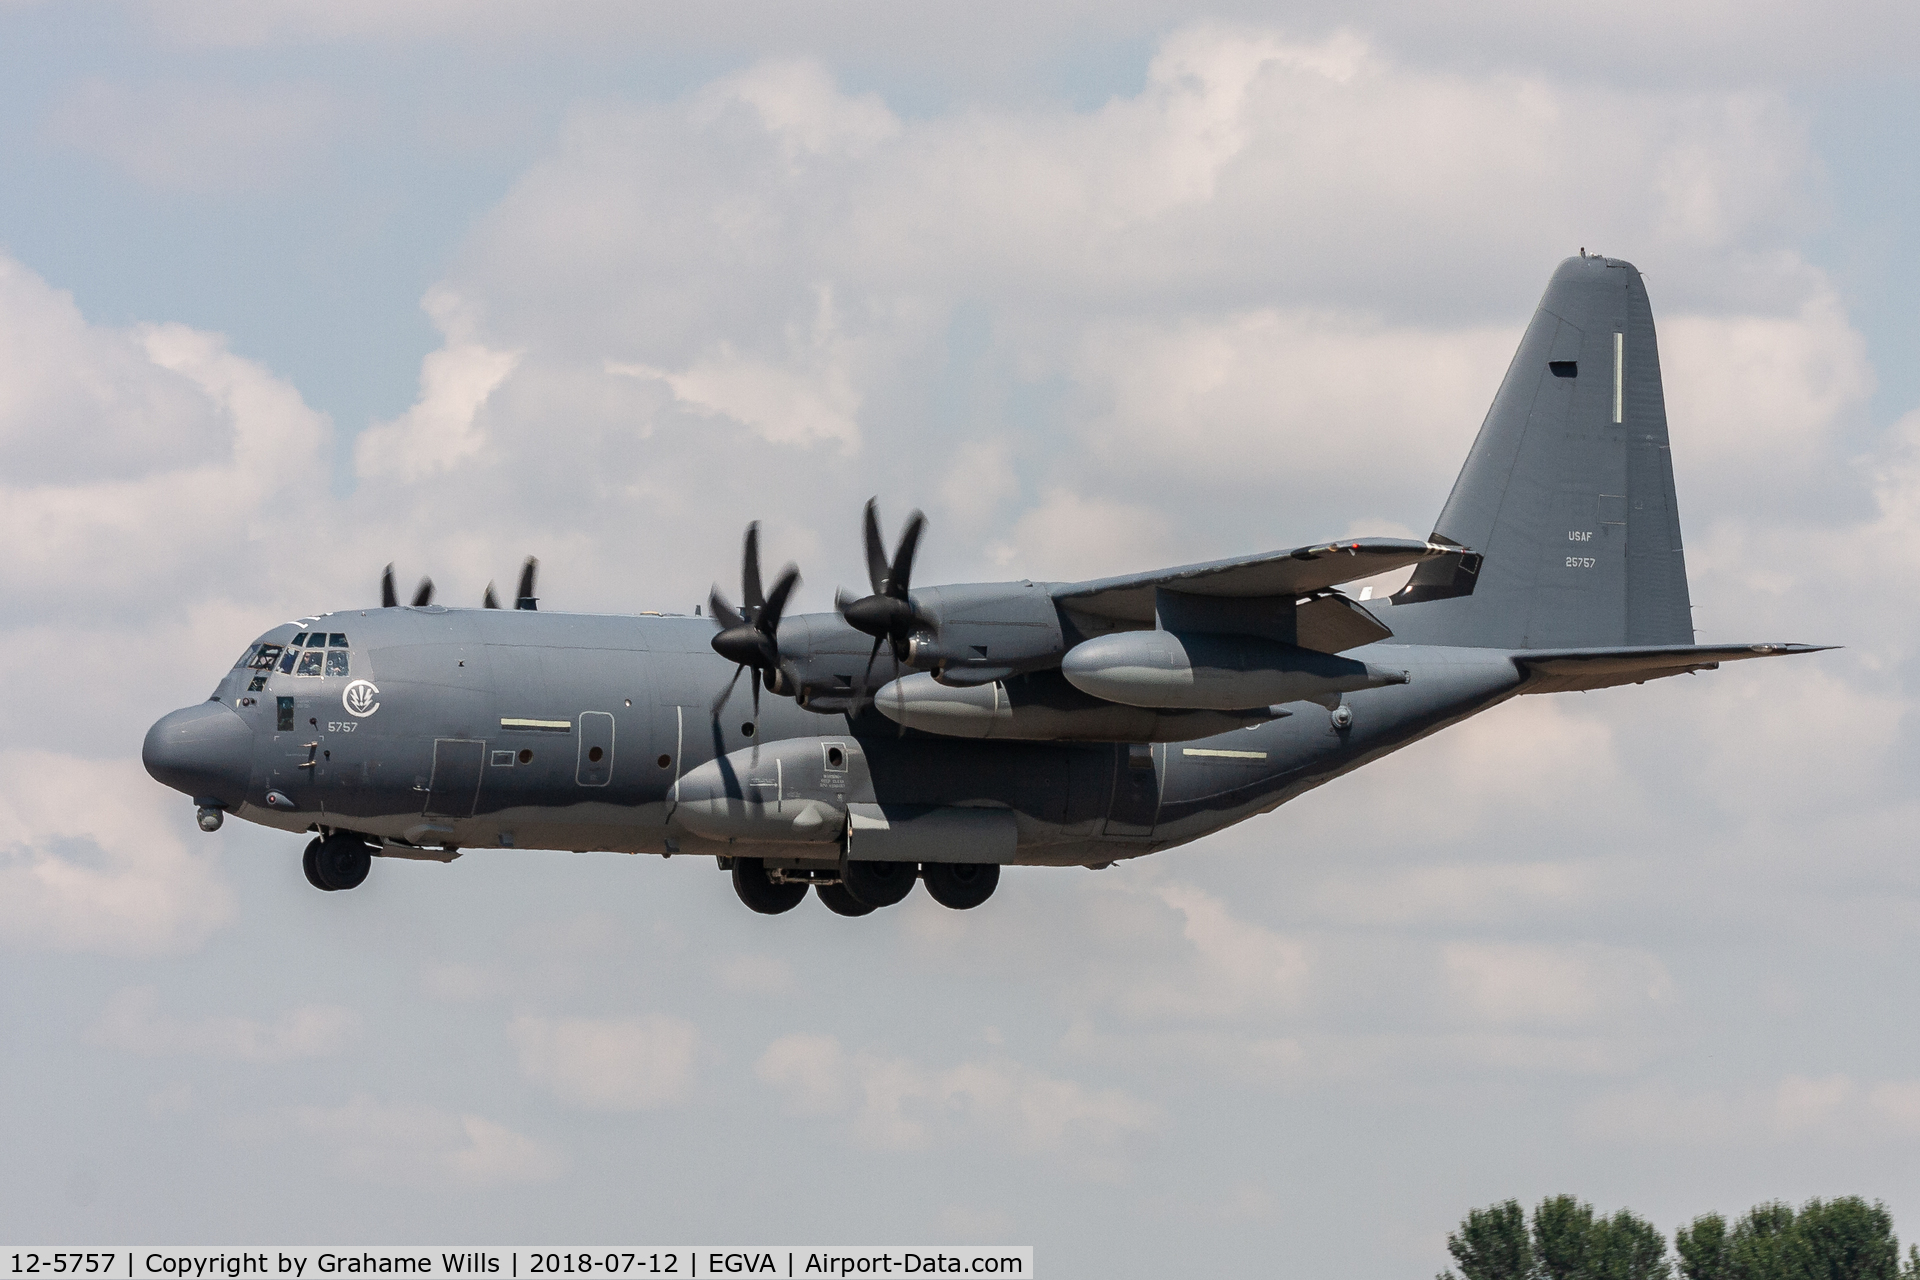 12-5757, 2014 Lockheed Martin MC-130J Commando II C/N 382-5757, Lockheed MC-130J 12-5757 67 SOS 352 SOW USAF, Fairford 12/7/18